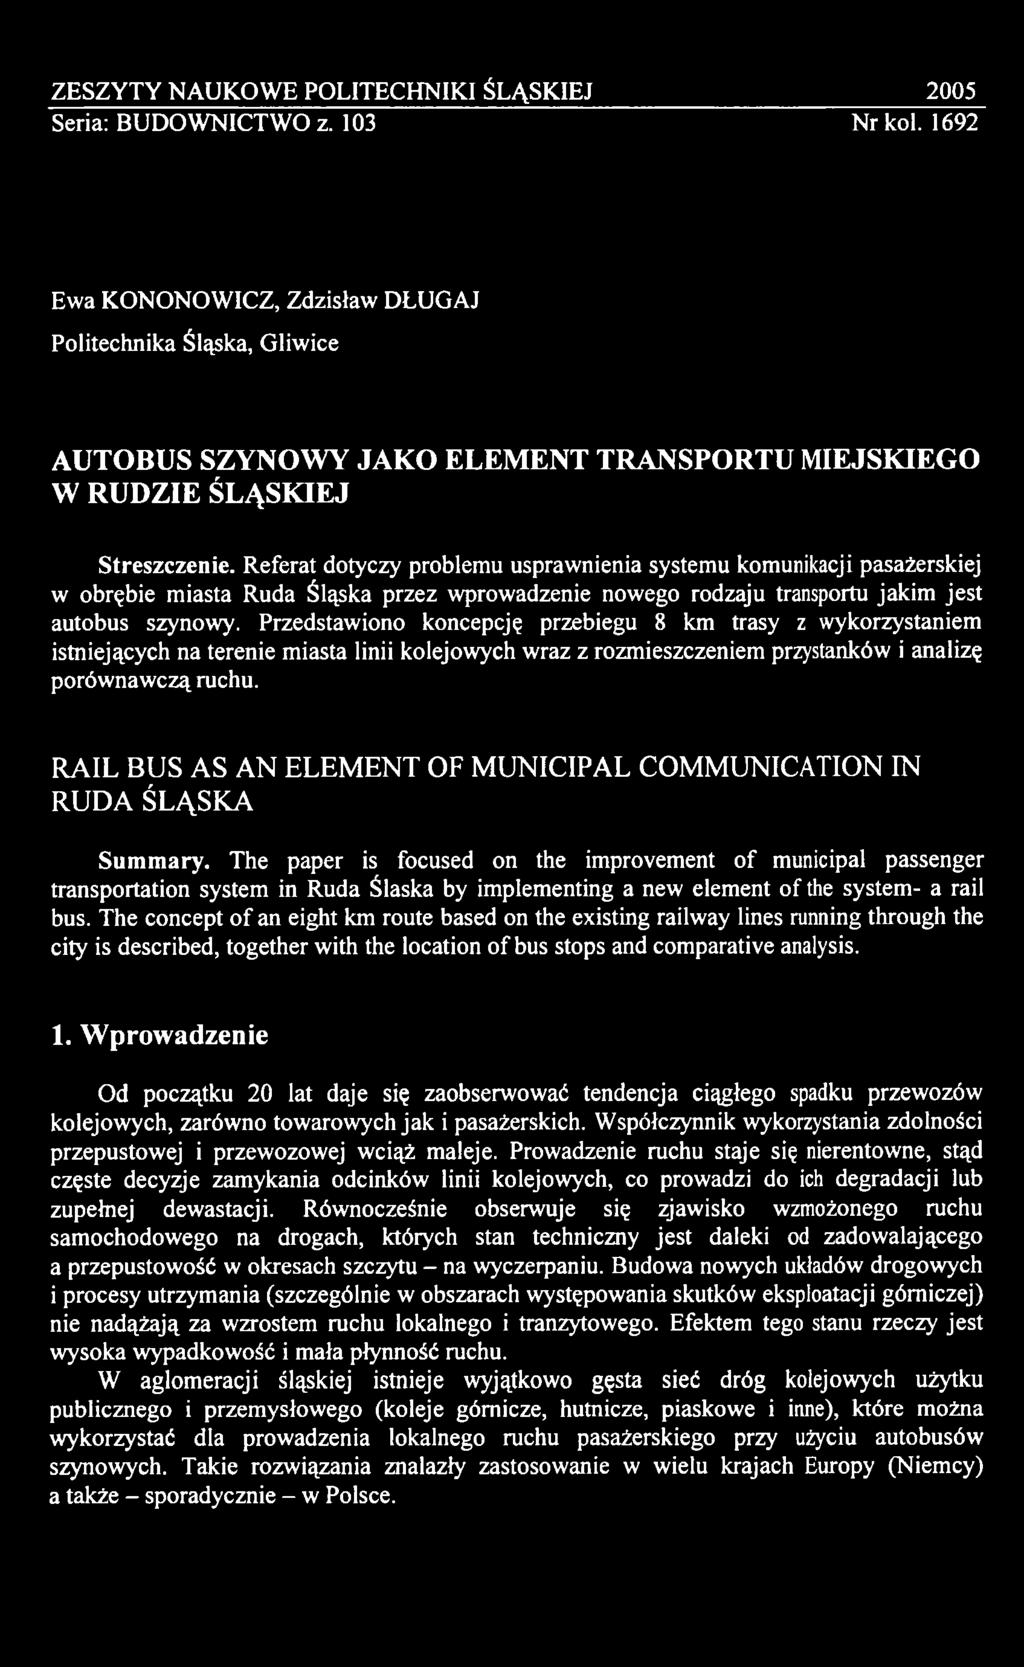 RAIL BUS AS AN ELEMENT OF MUNICIPAL COMMUNICATION IN RUDA ŚLĄSKA Summary.